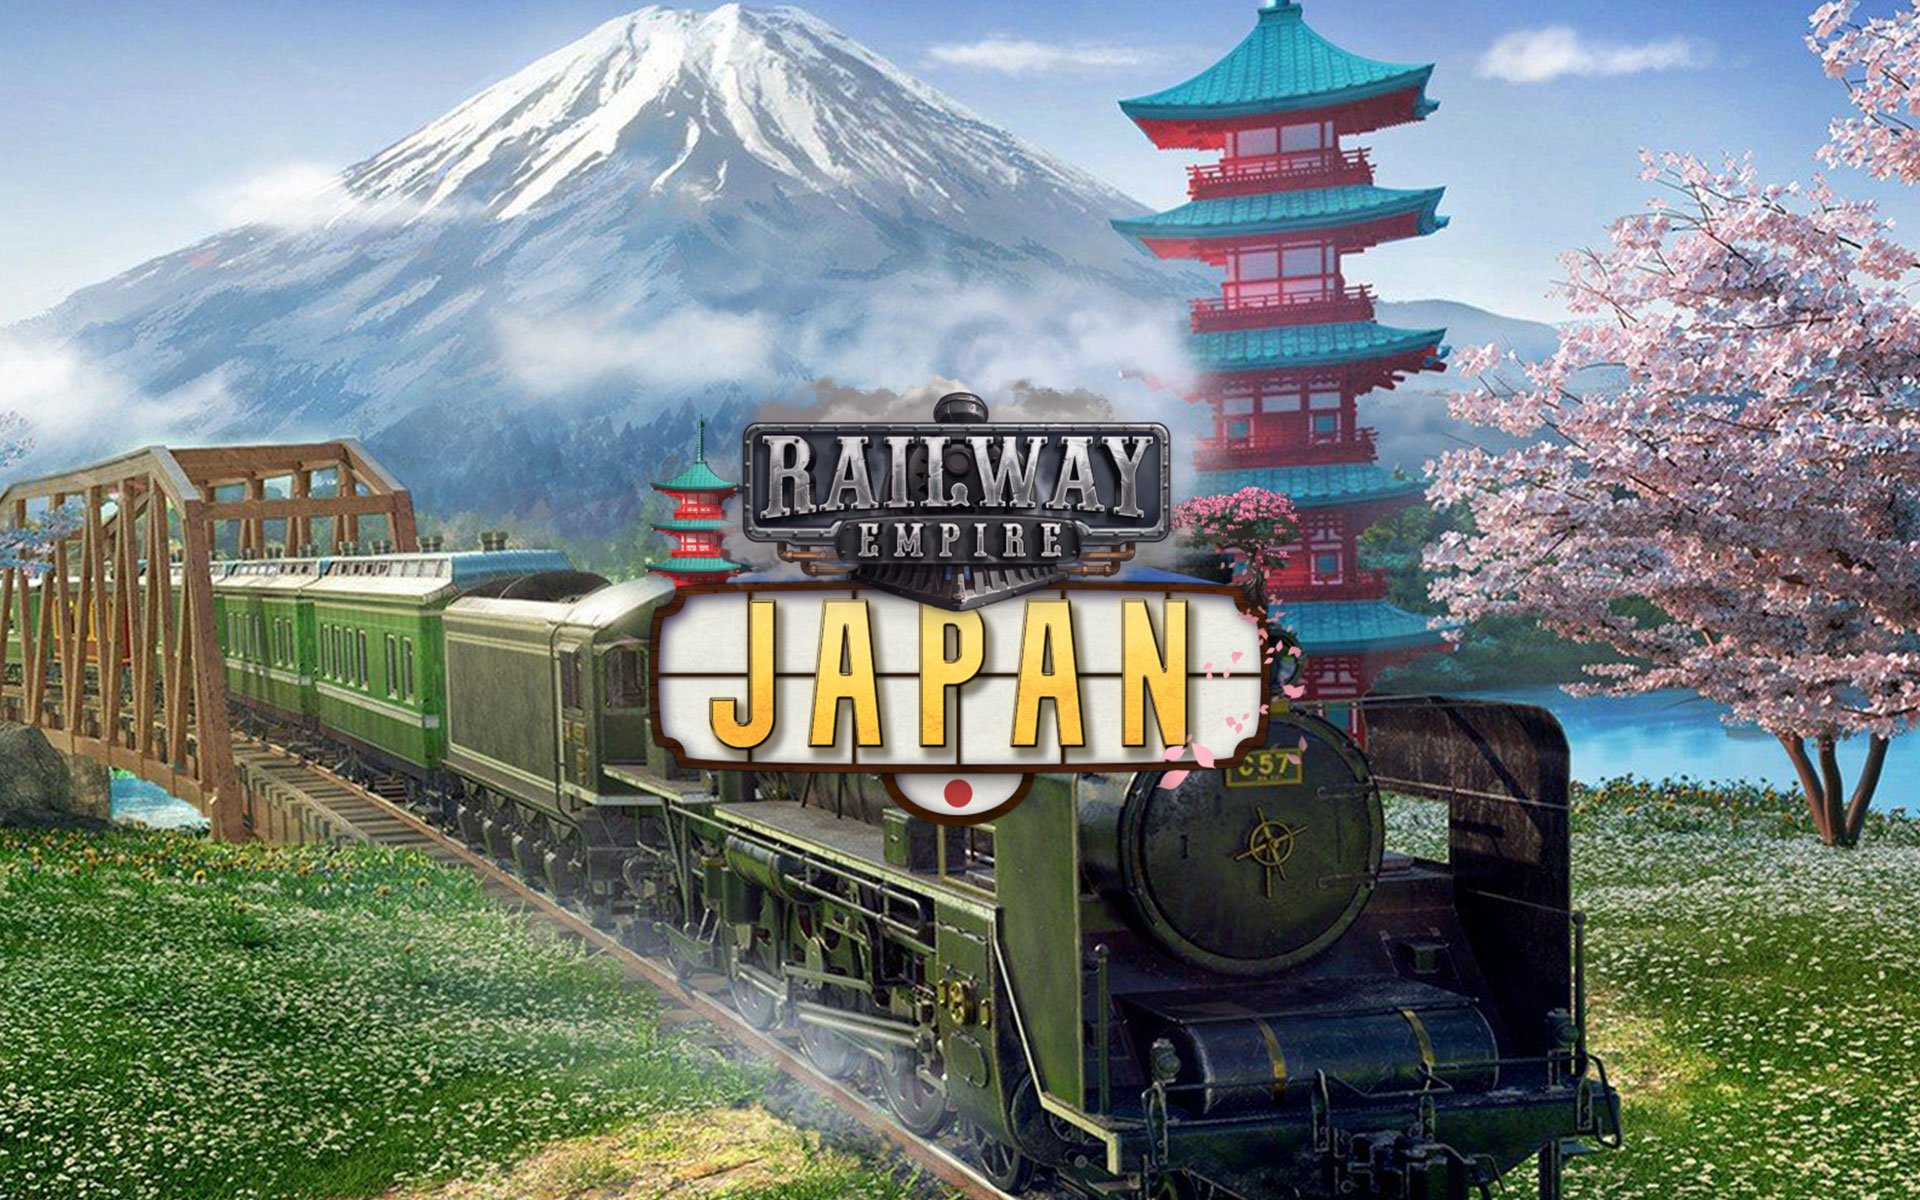  Railway Empire - Japan (DLC) por R$ 25